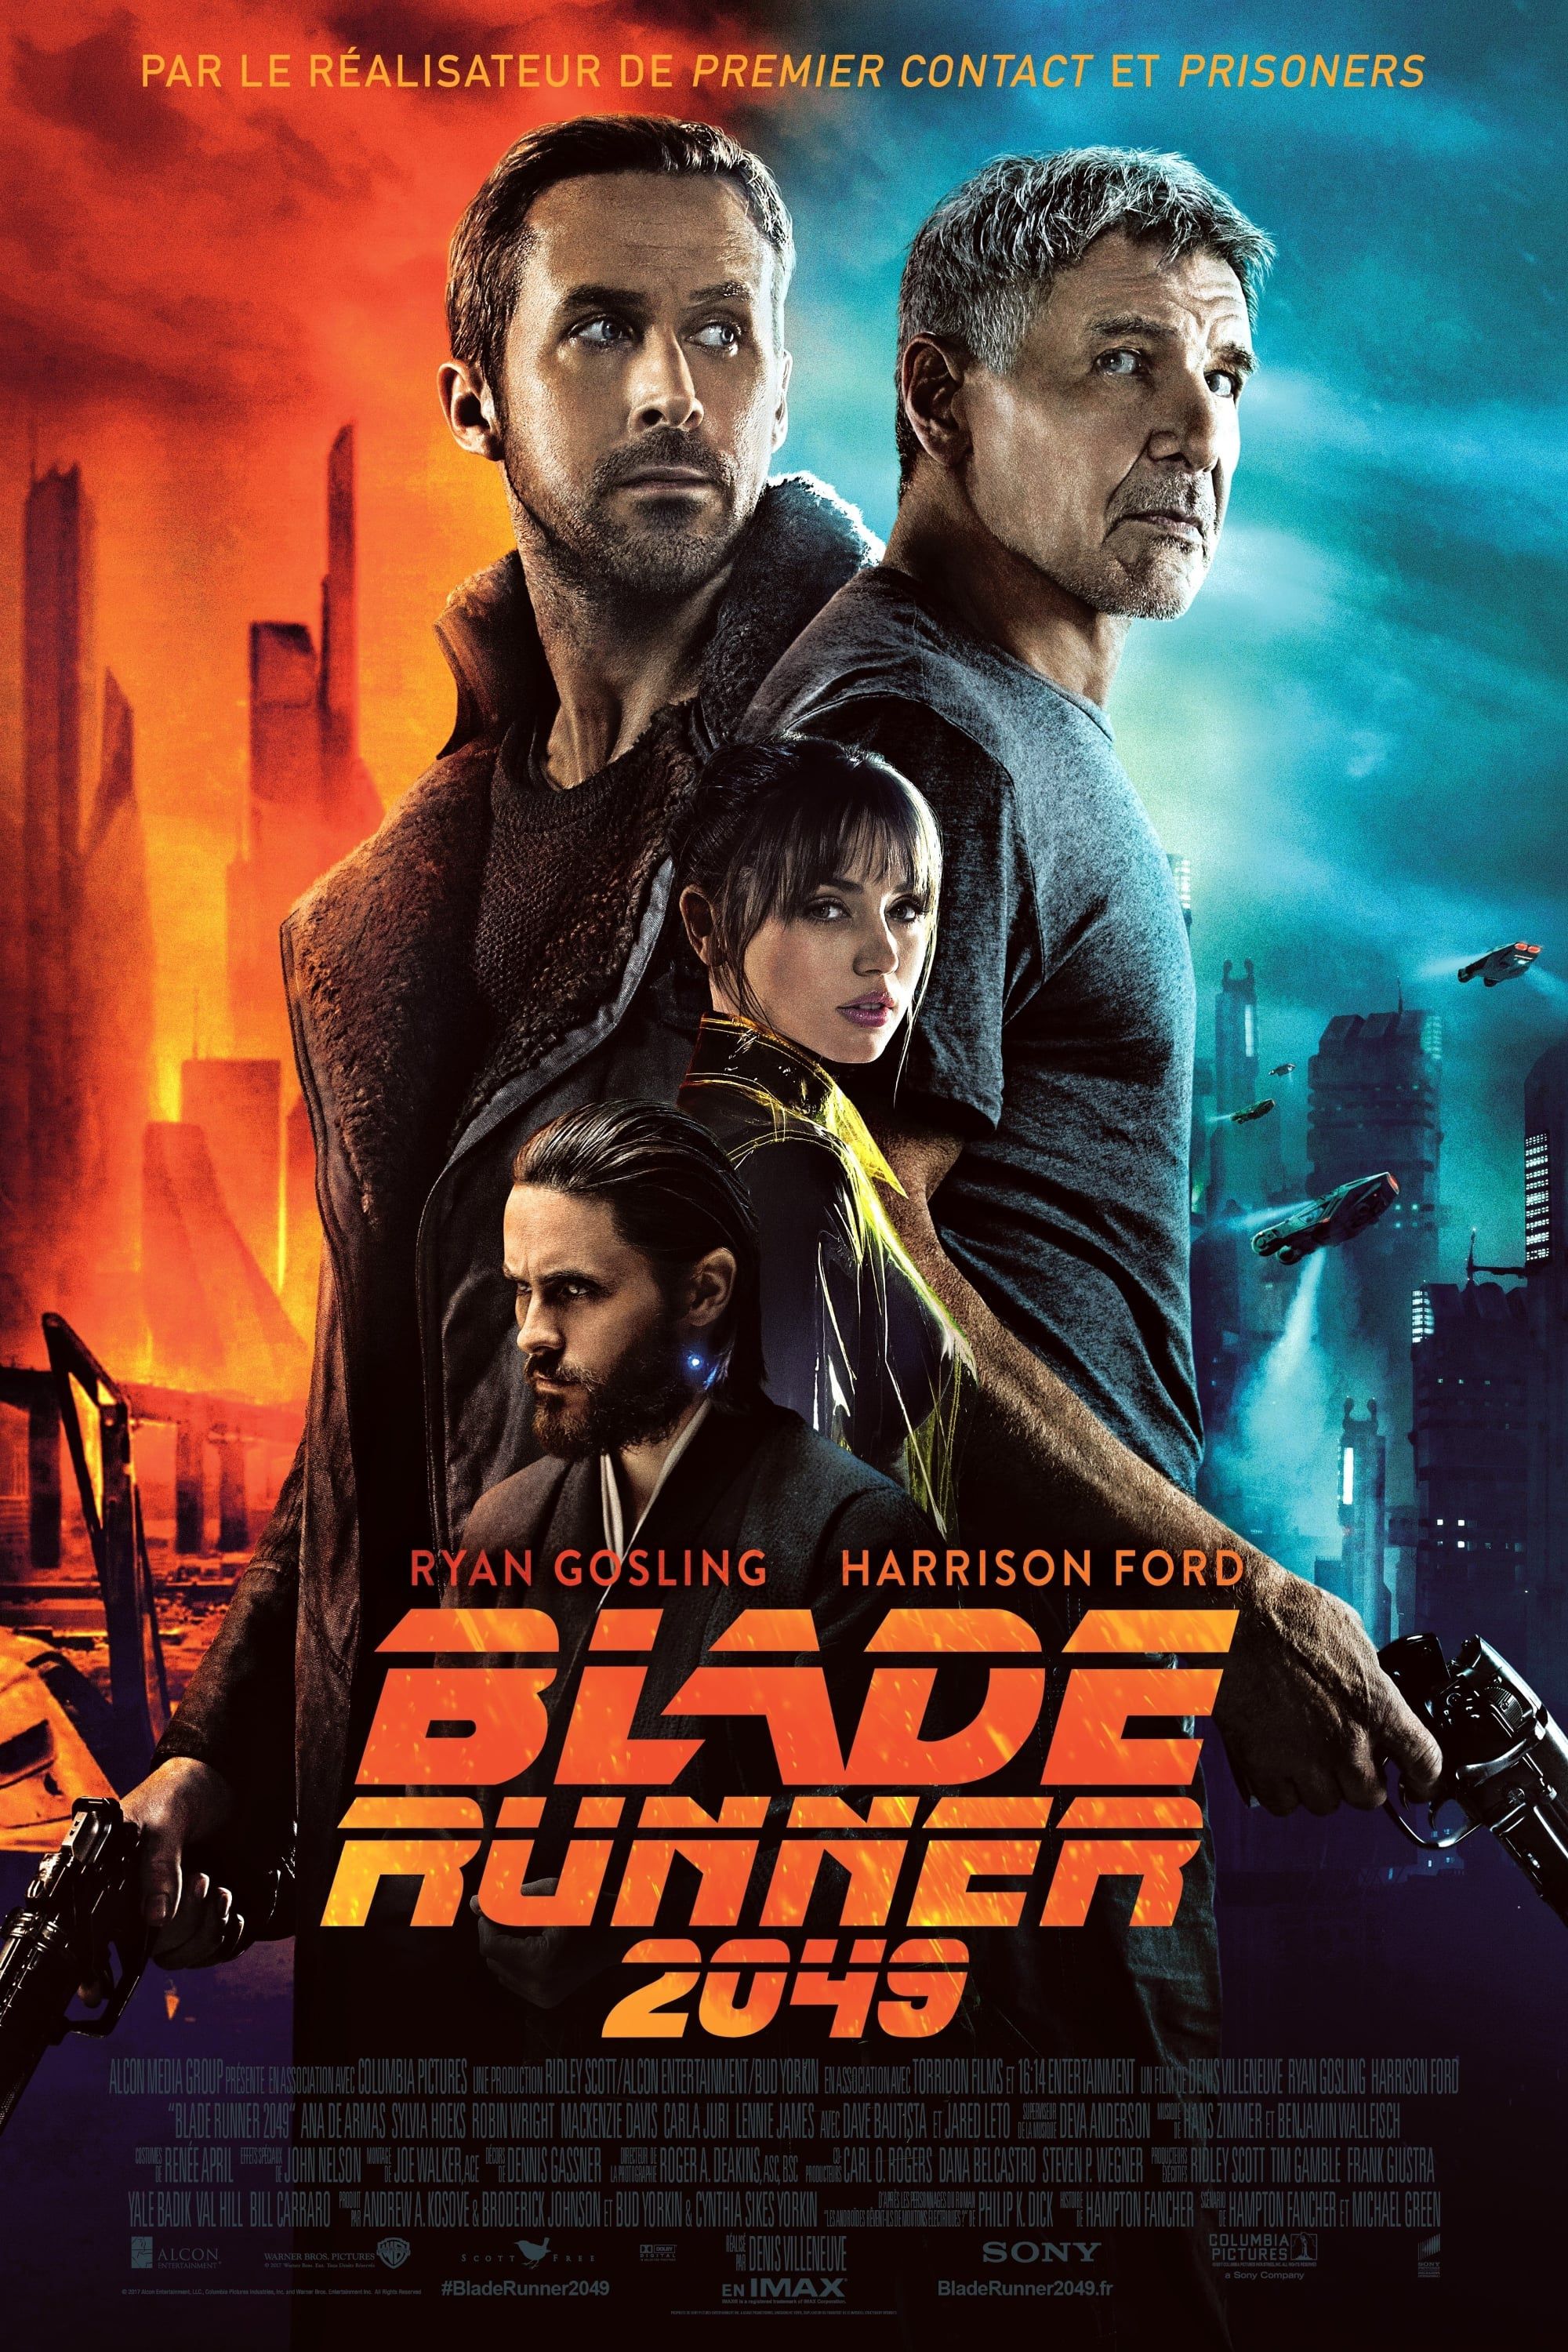 Blade Runner 2049 - Film (2017) streaming VF gratuit complet